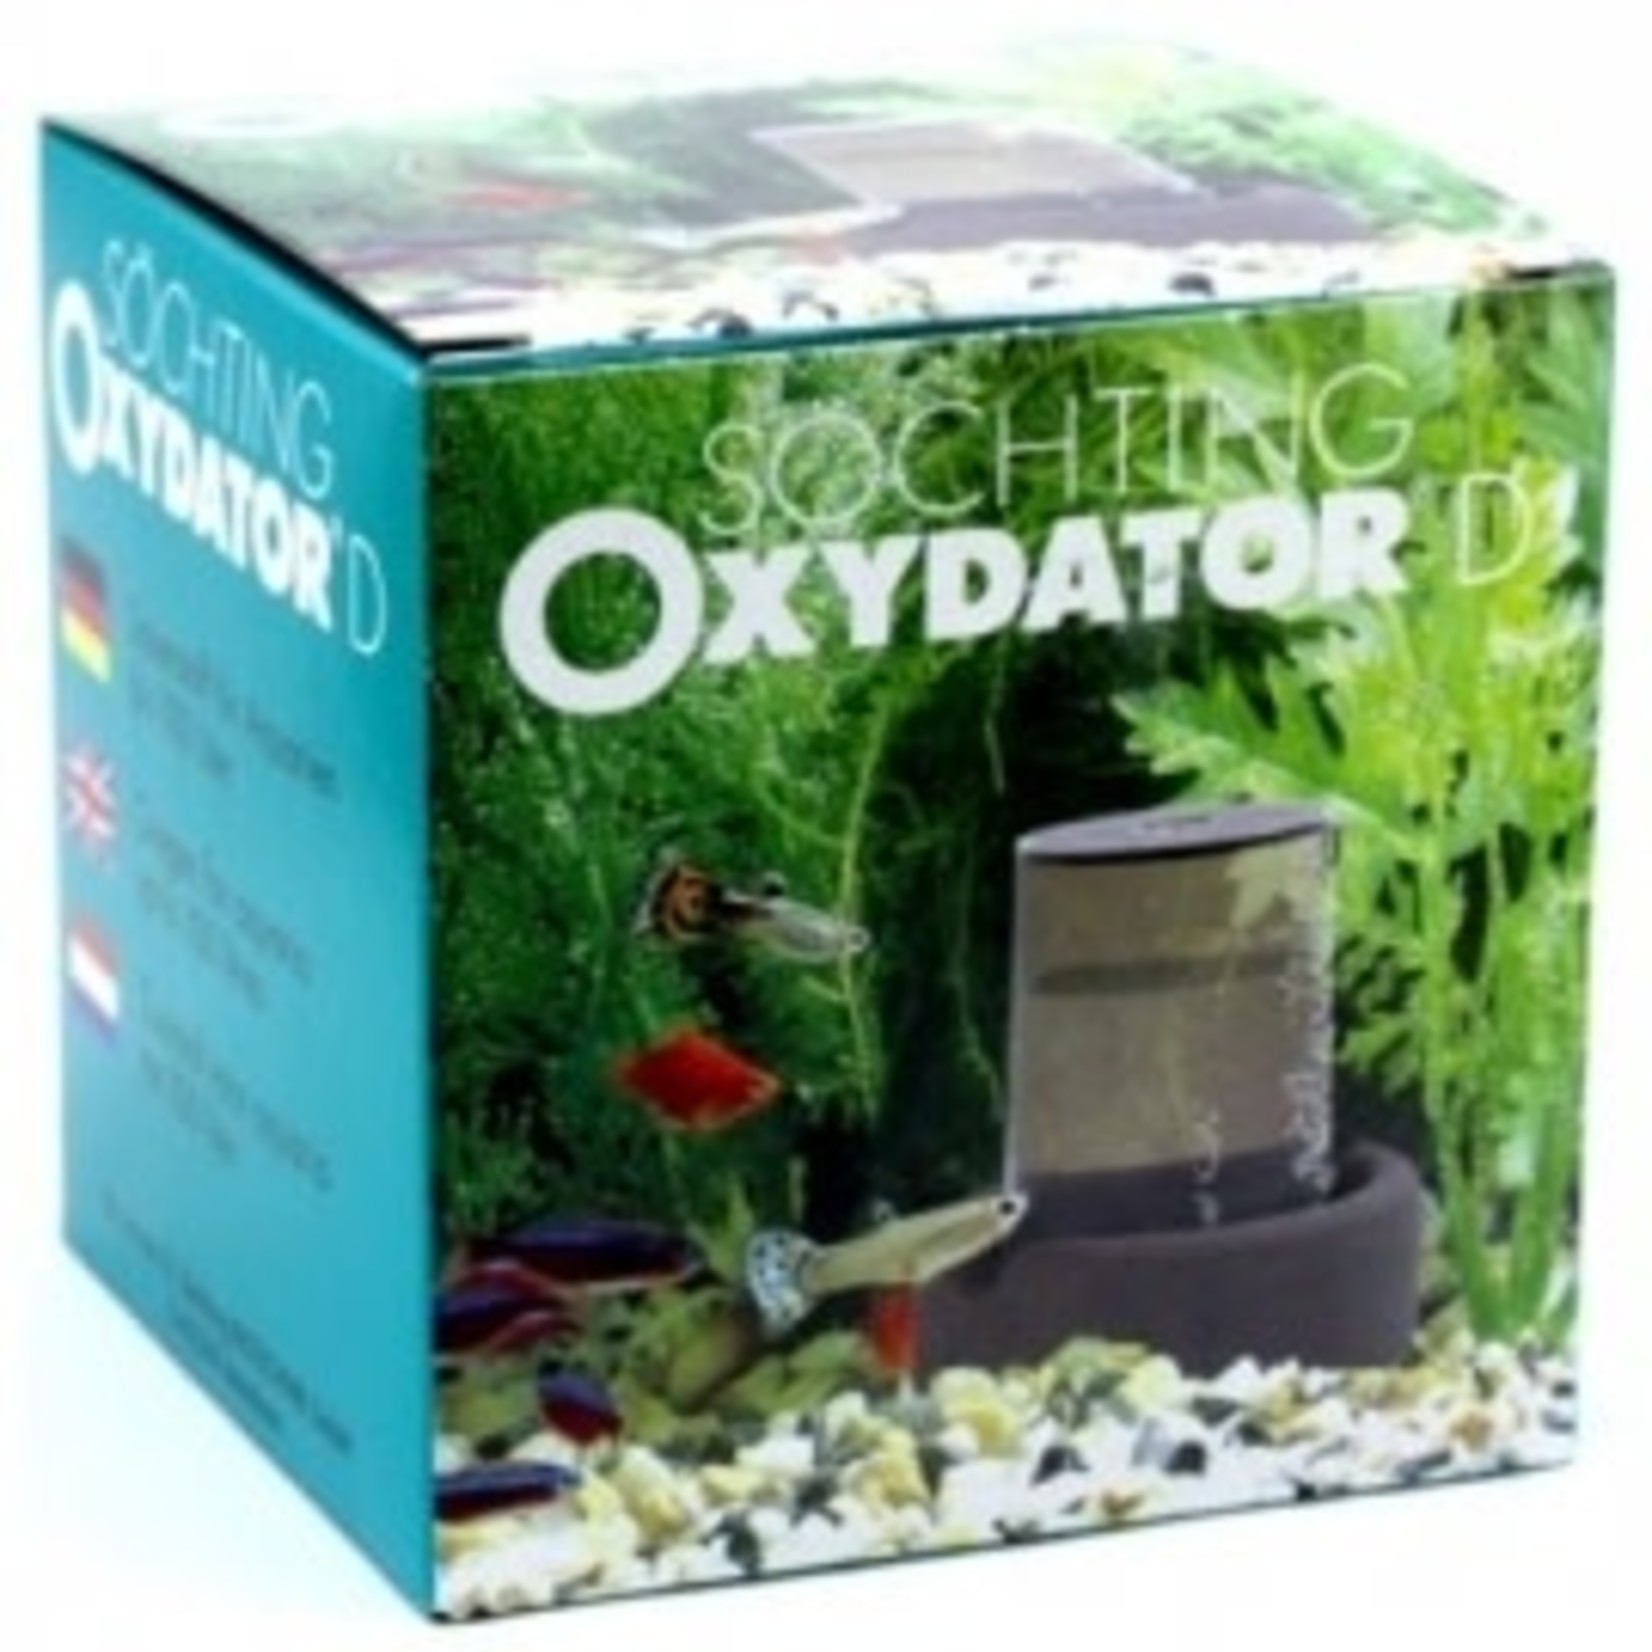 Söchting  Oxydator OXYDATOR D 9x9cm SOCHTING